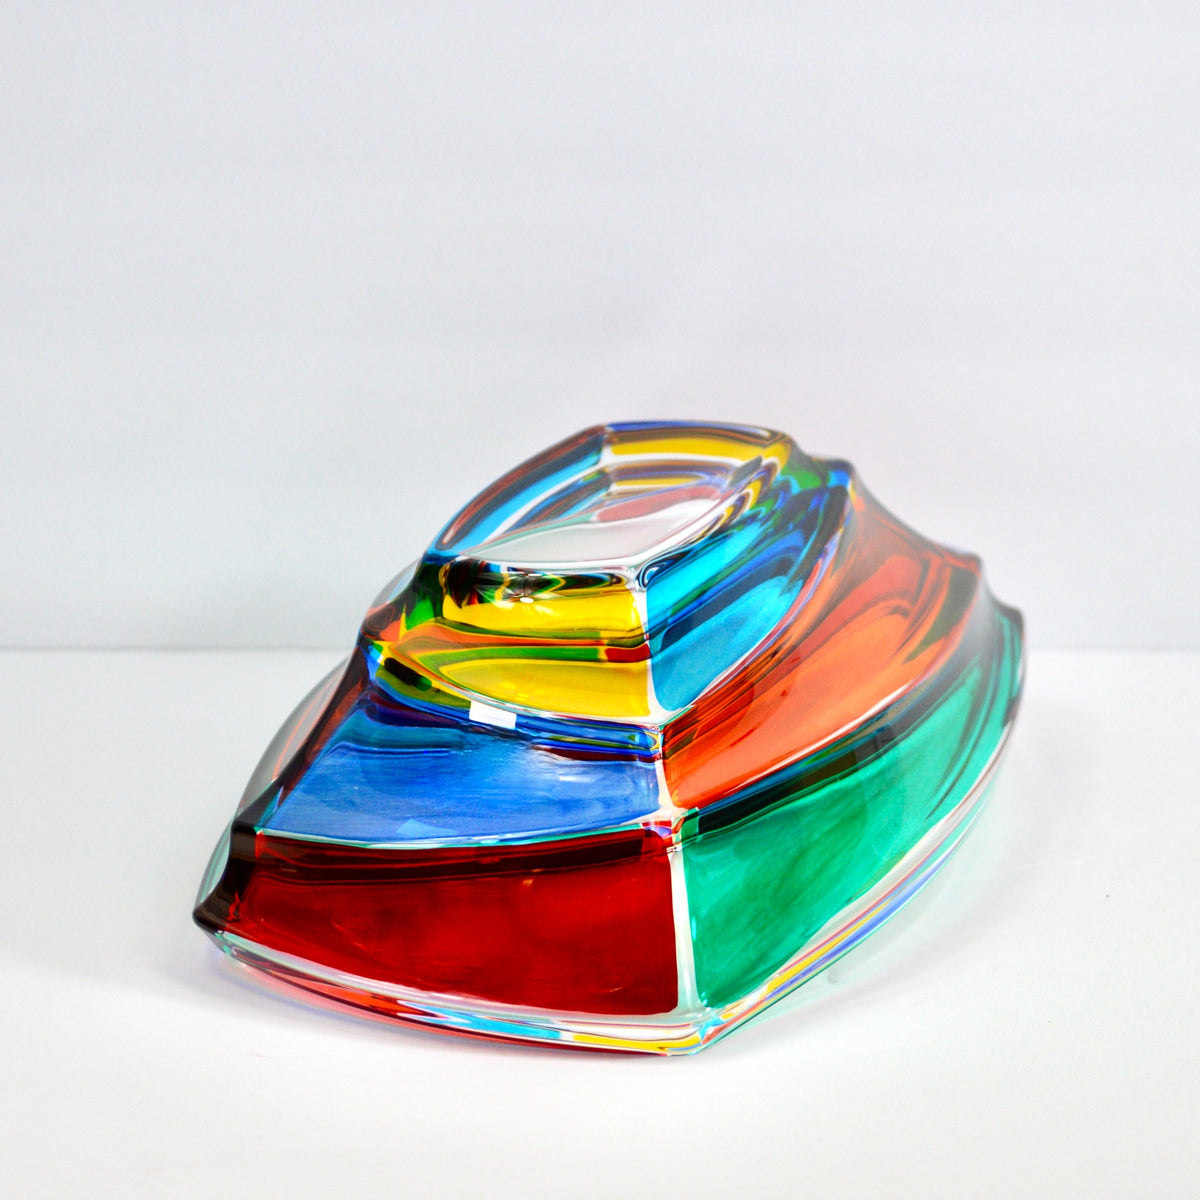 Vela Italian Crystal Oval Centerpiece Bowl, Made in Italy - My Italian Decor